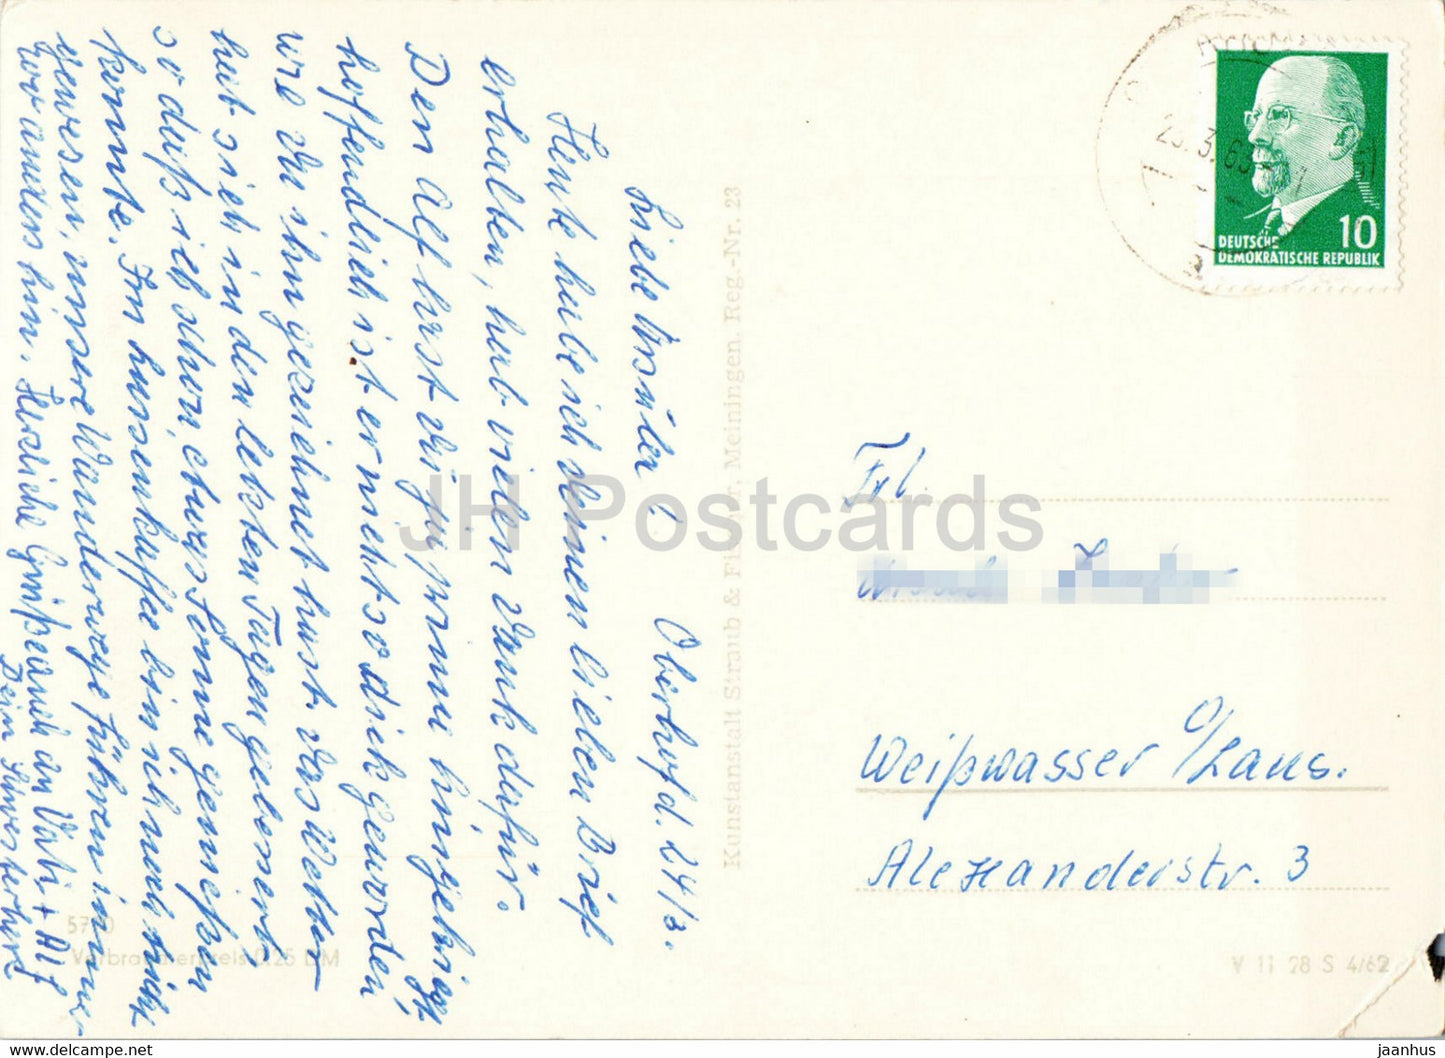 Oberhof - Thur Wald - Luftkurort u Wintersportplatz - old postcard - 1963 - Germany DDR - used